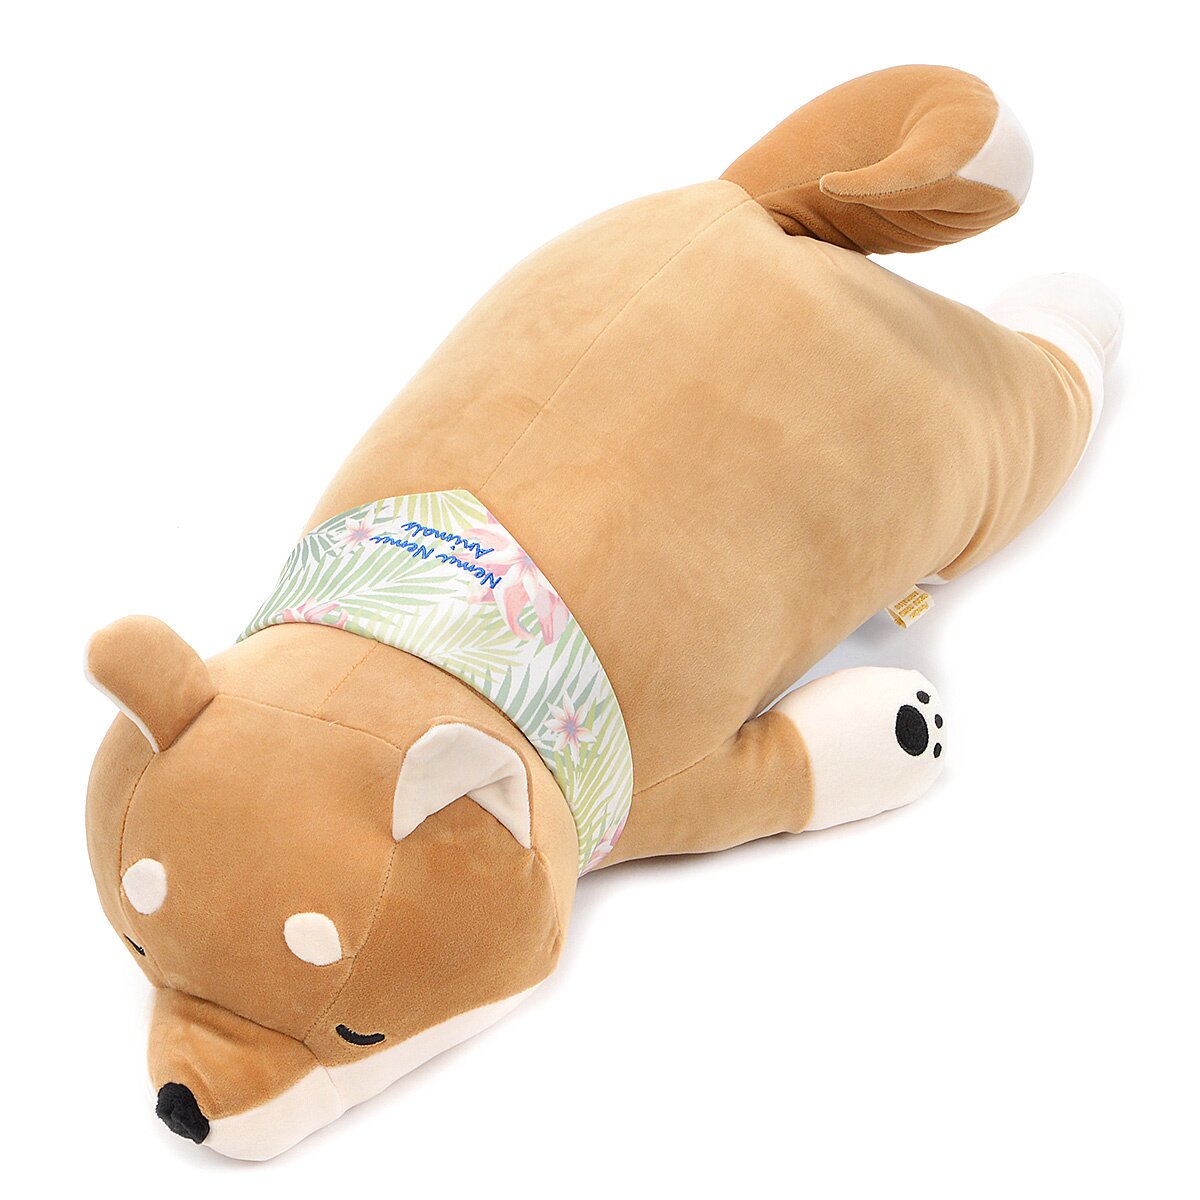 Thanko's USB Heated Air Hug Pillow is inflatable warm dakimakura